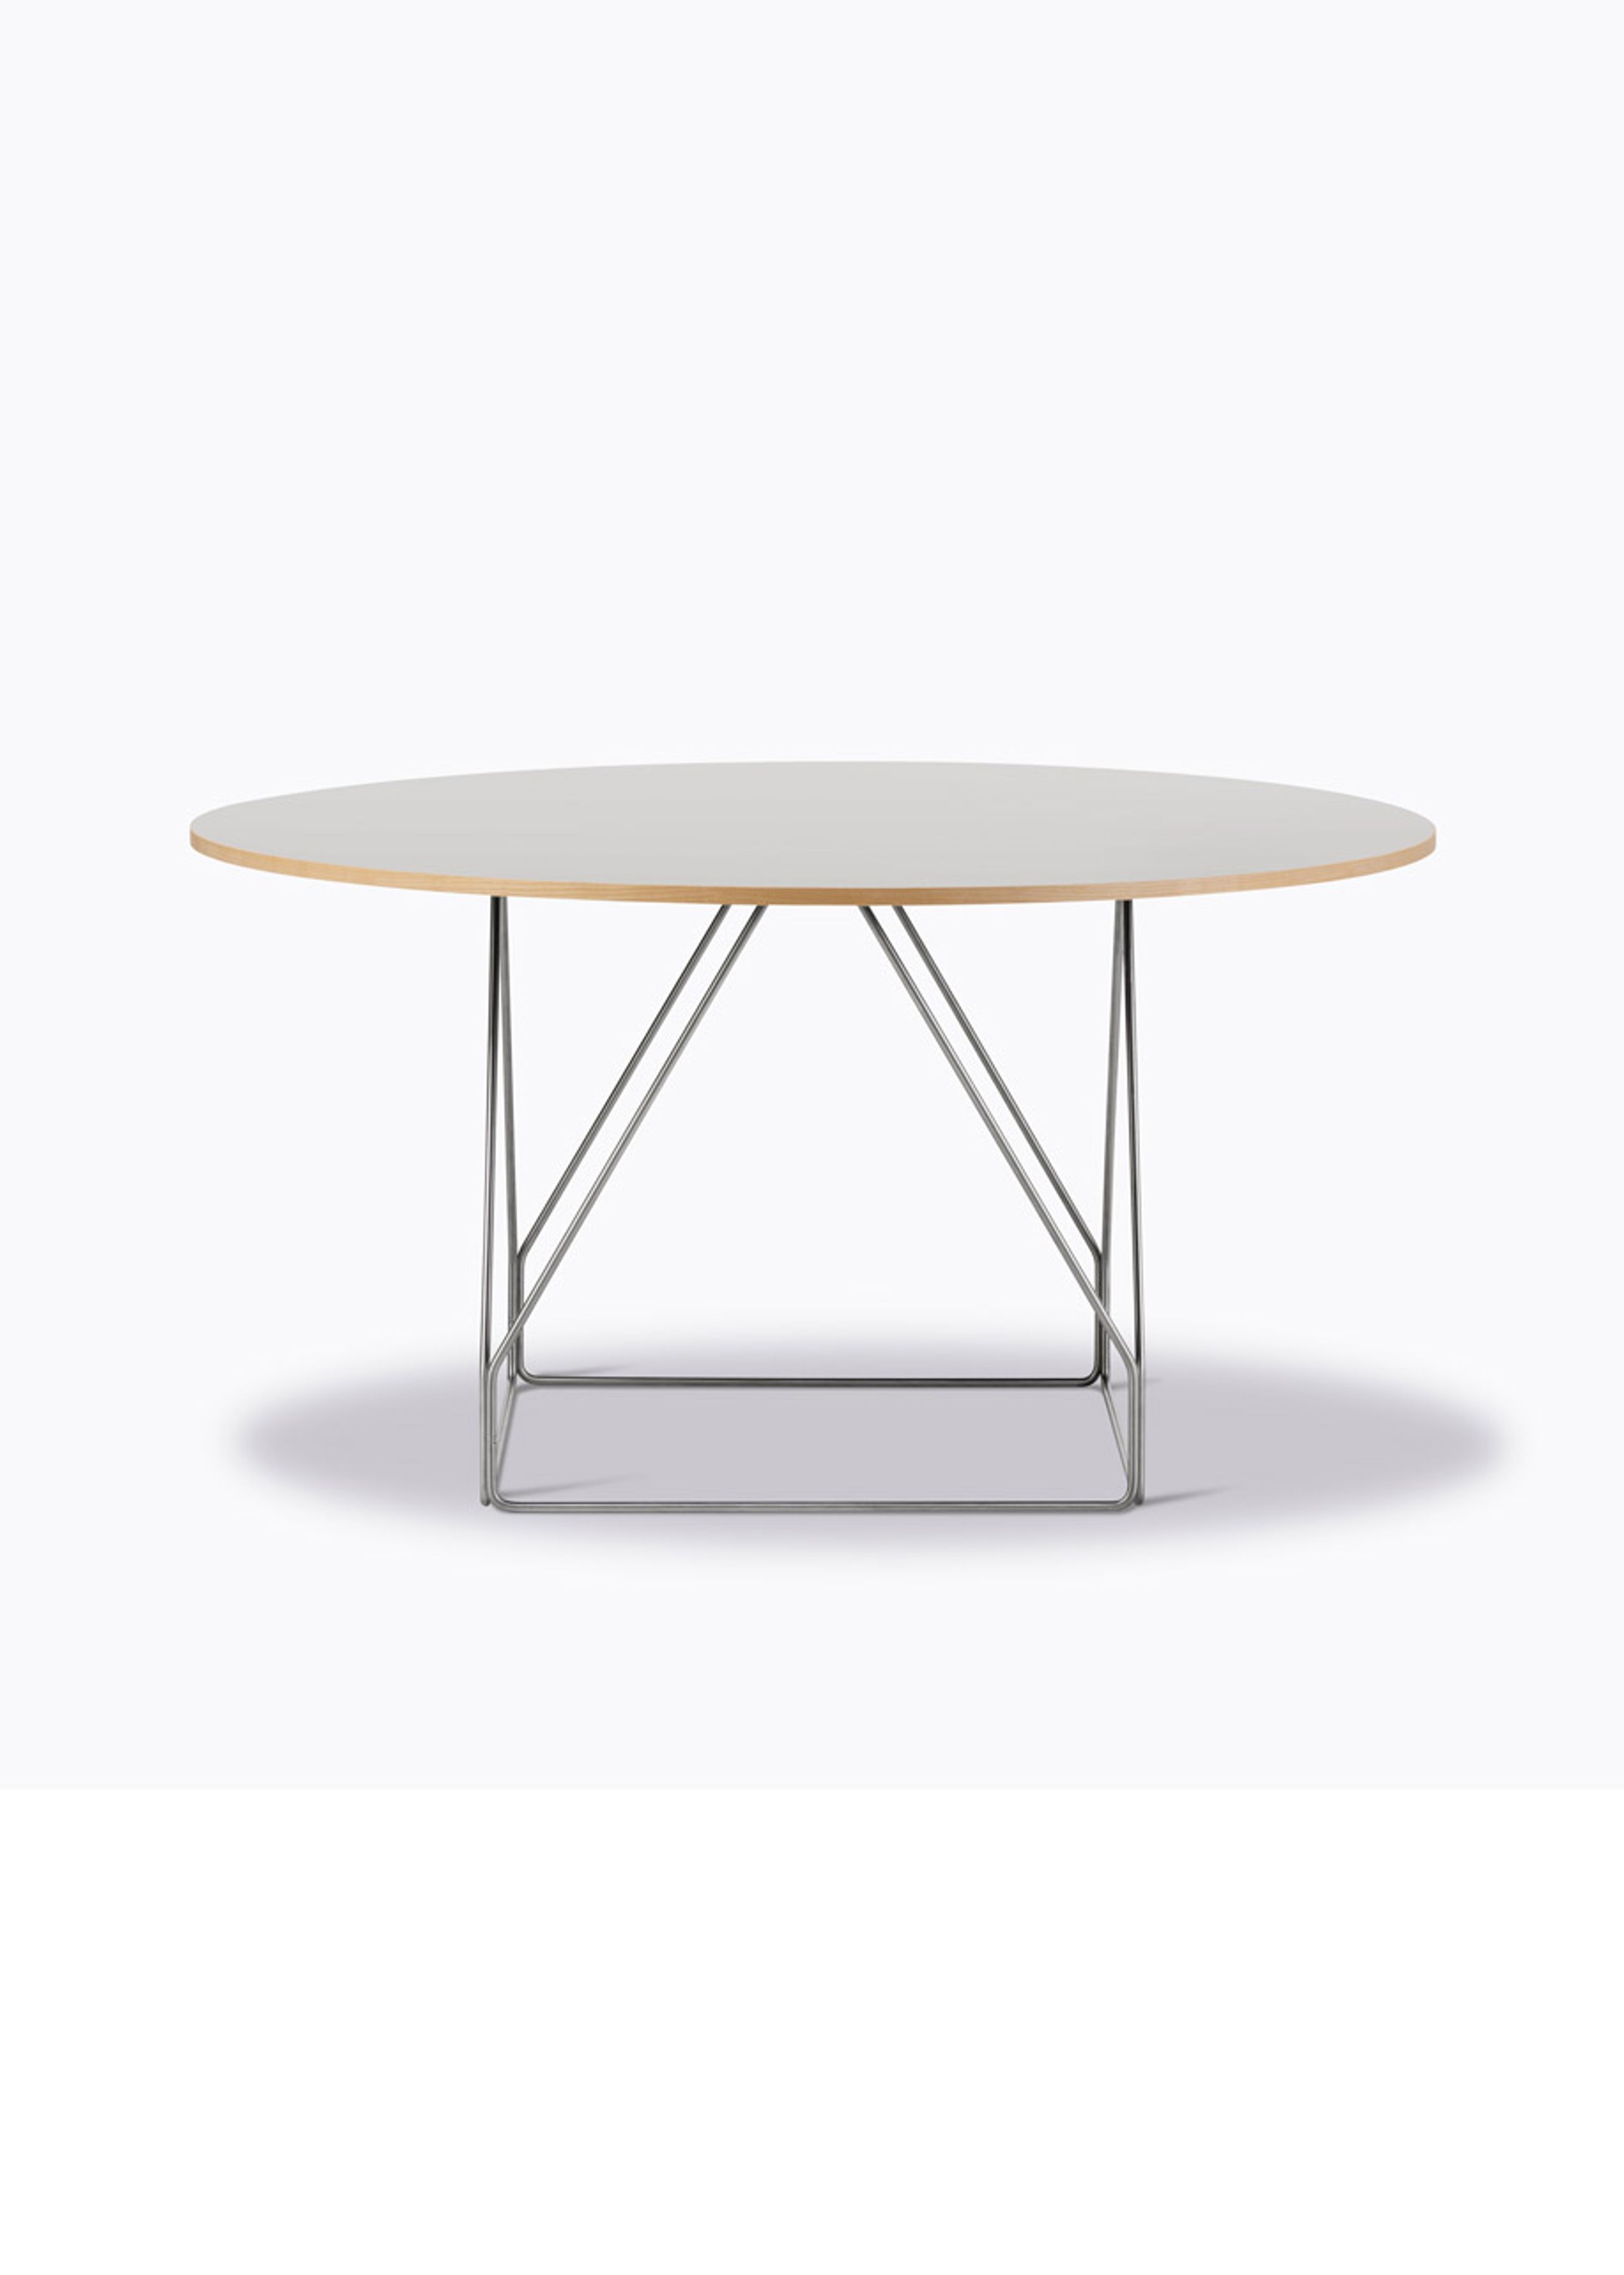 Fredericia Furniture - Dining Table - JG Table 6568 by Jørgen Gammelgaard - Grey Linoleum w/Natural Ash / Brushed Stainless Steel